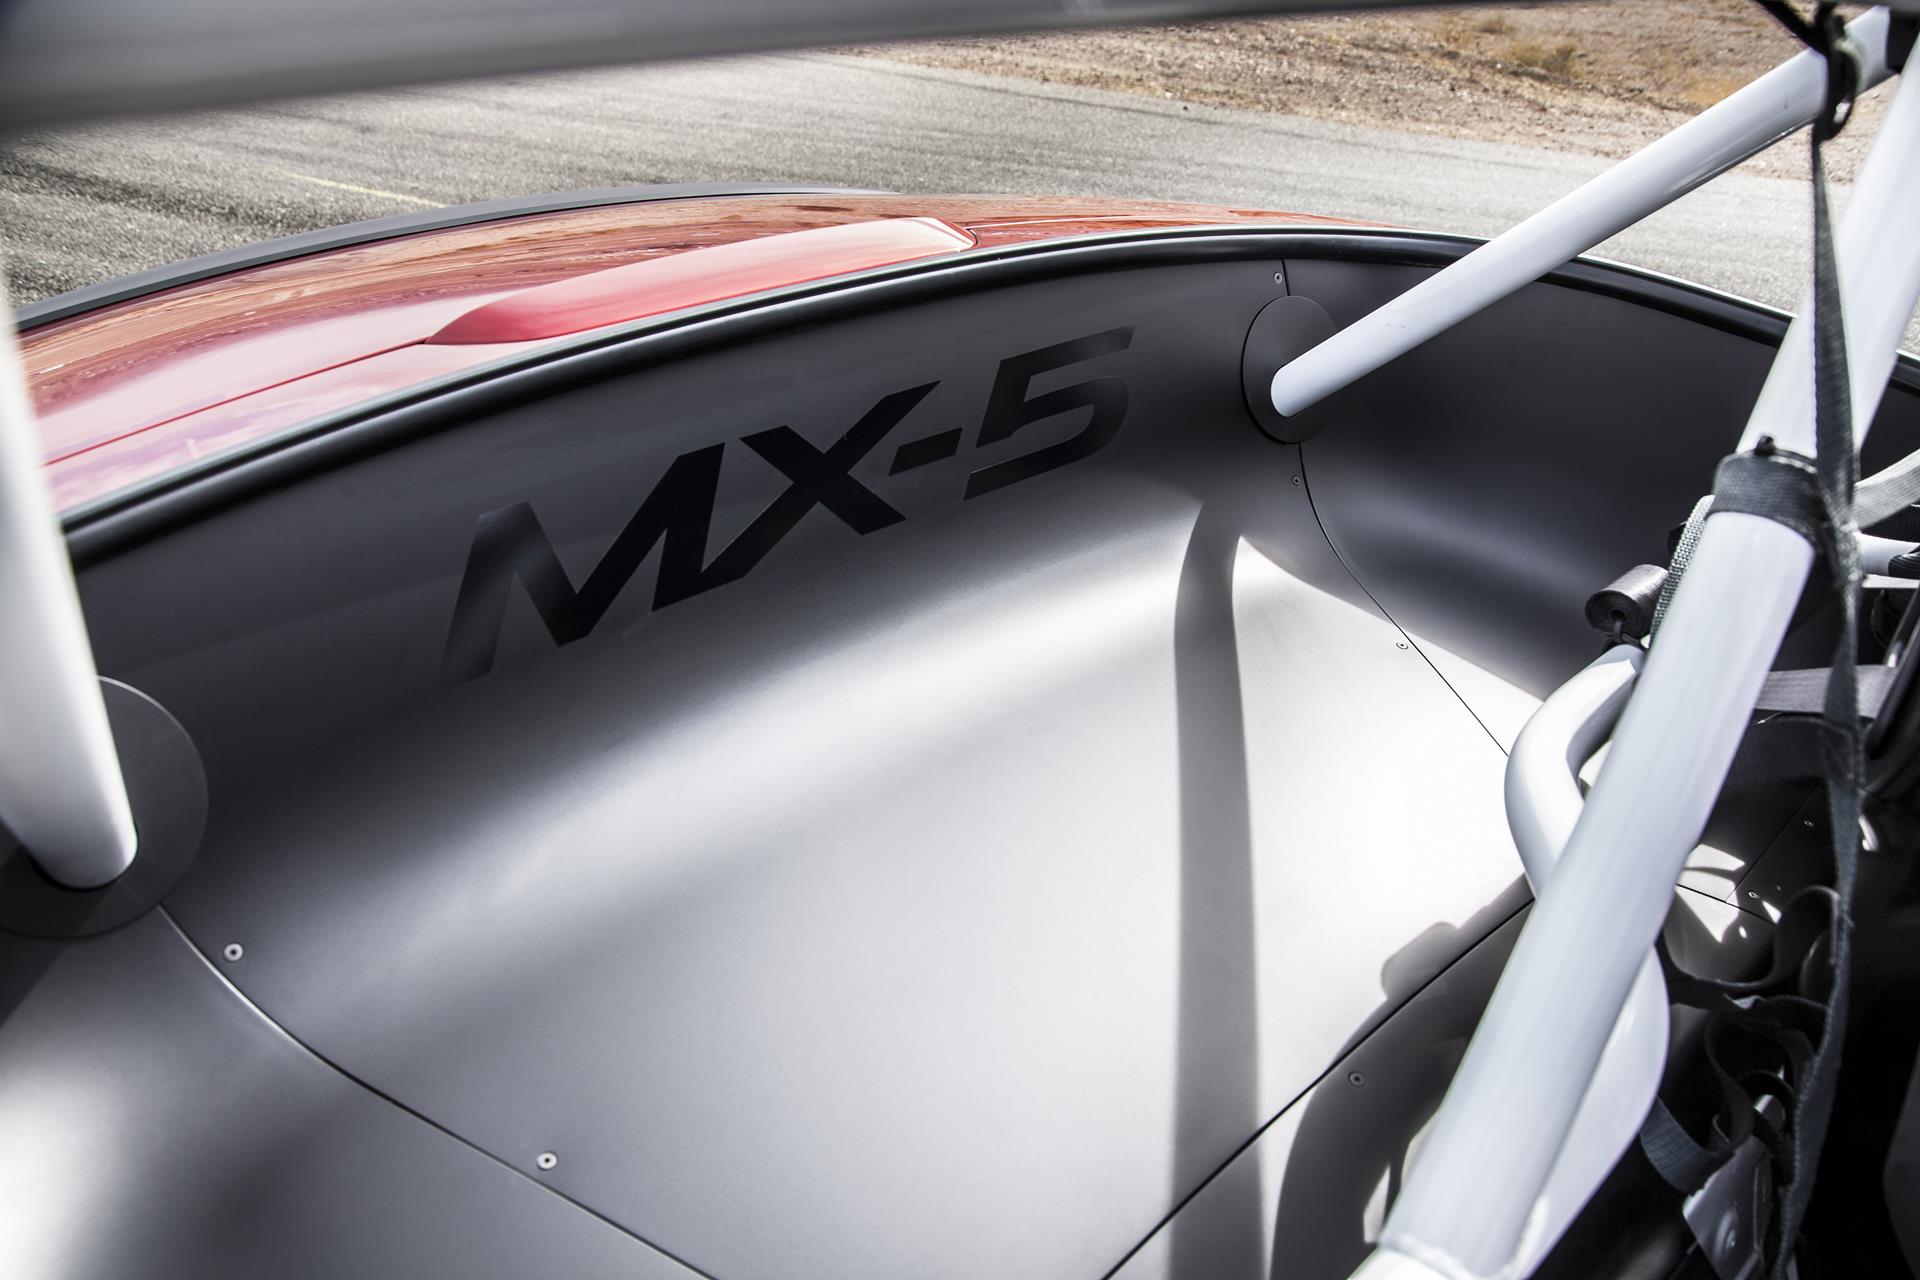 2015 Mazda MX-5 CUP